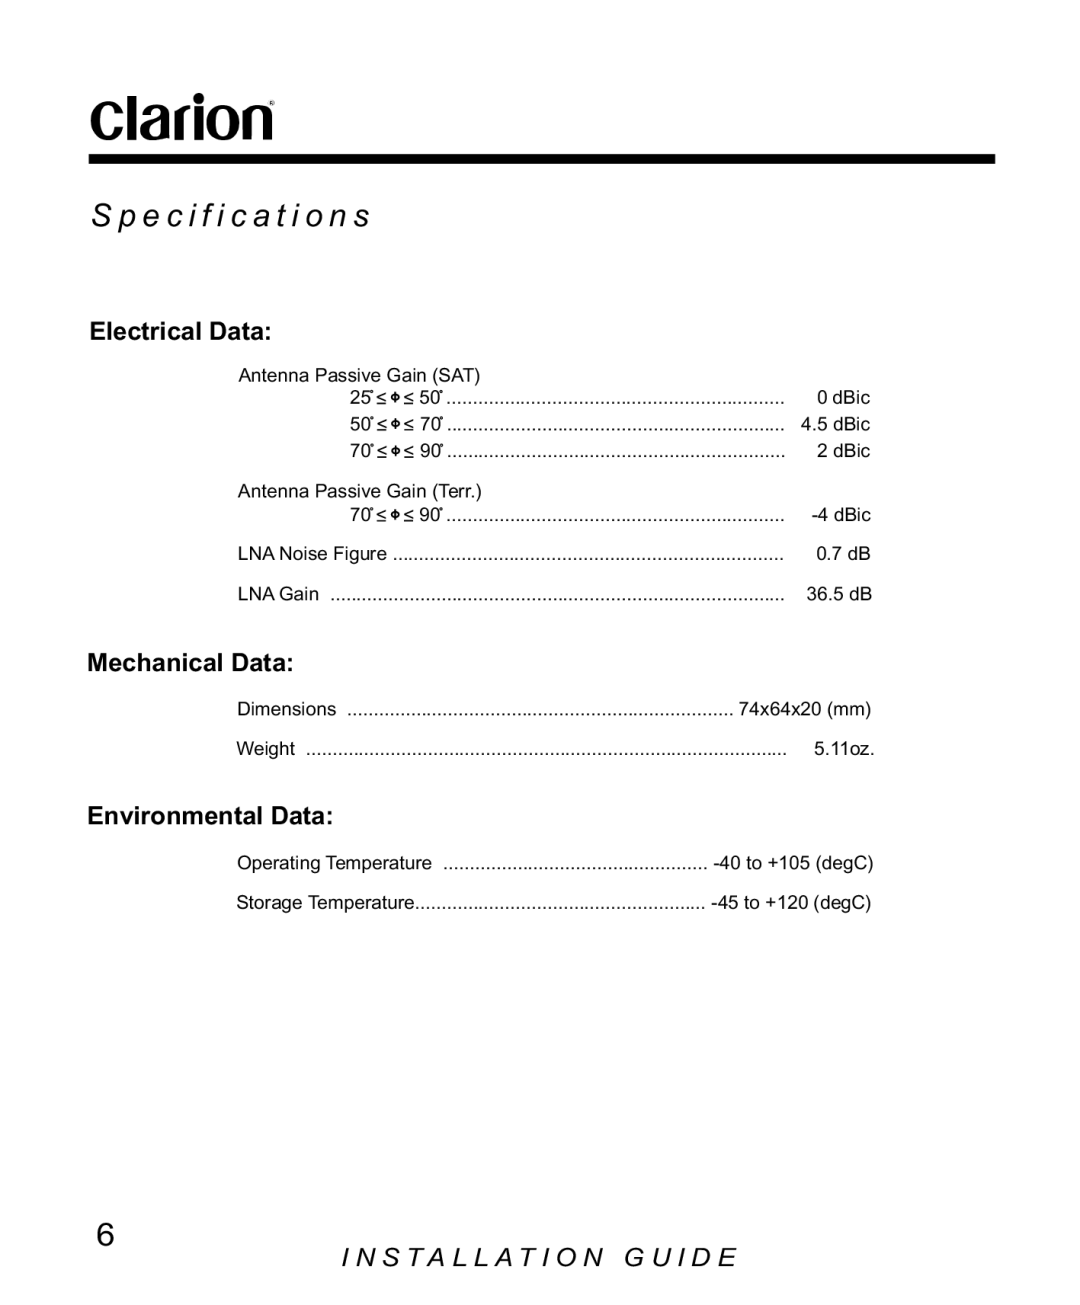 Clarion SA200 manual S p e c i f i c a t i o n s, Electrical Data, Mechanical Data, Environmental Data 